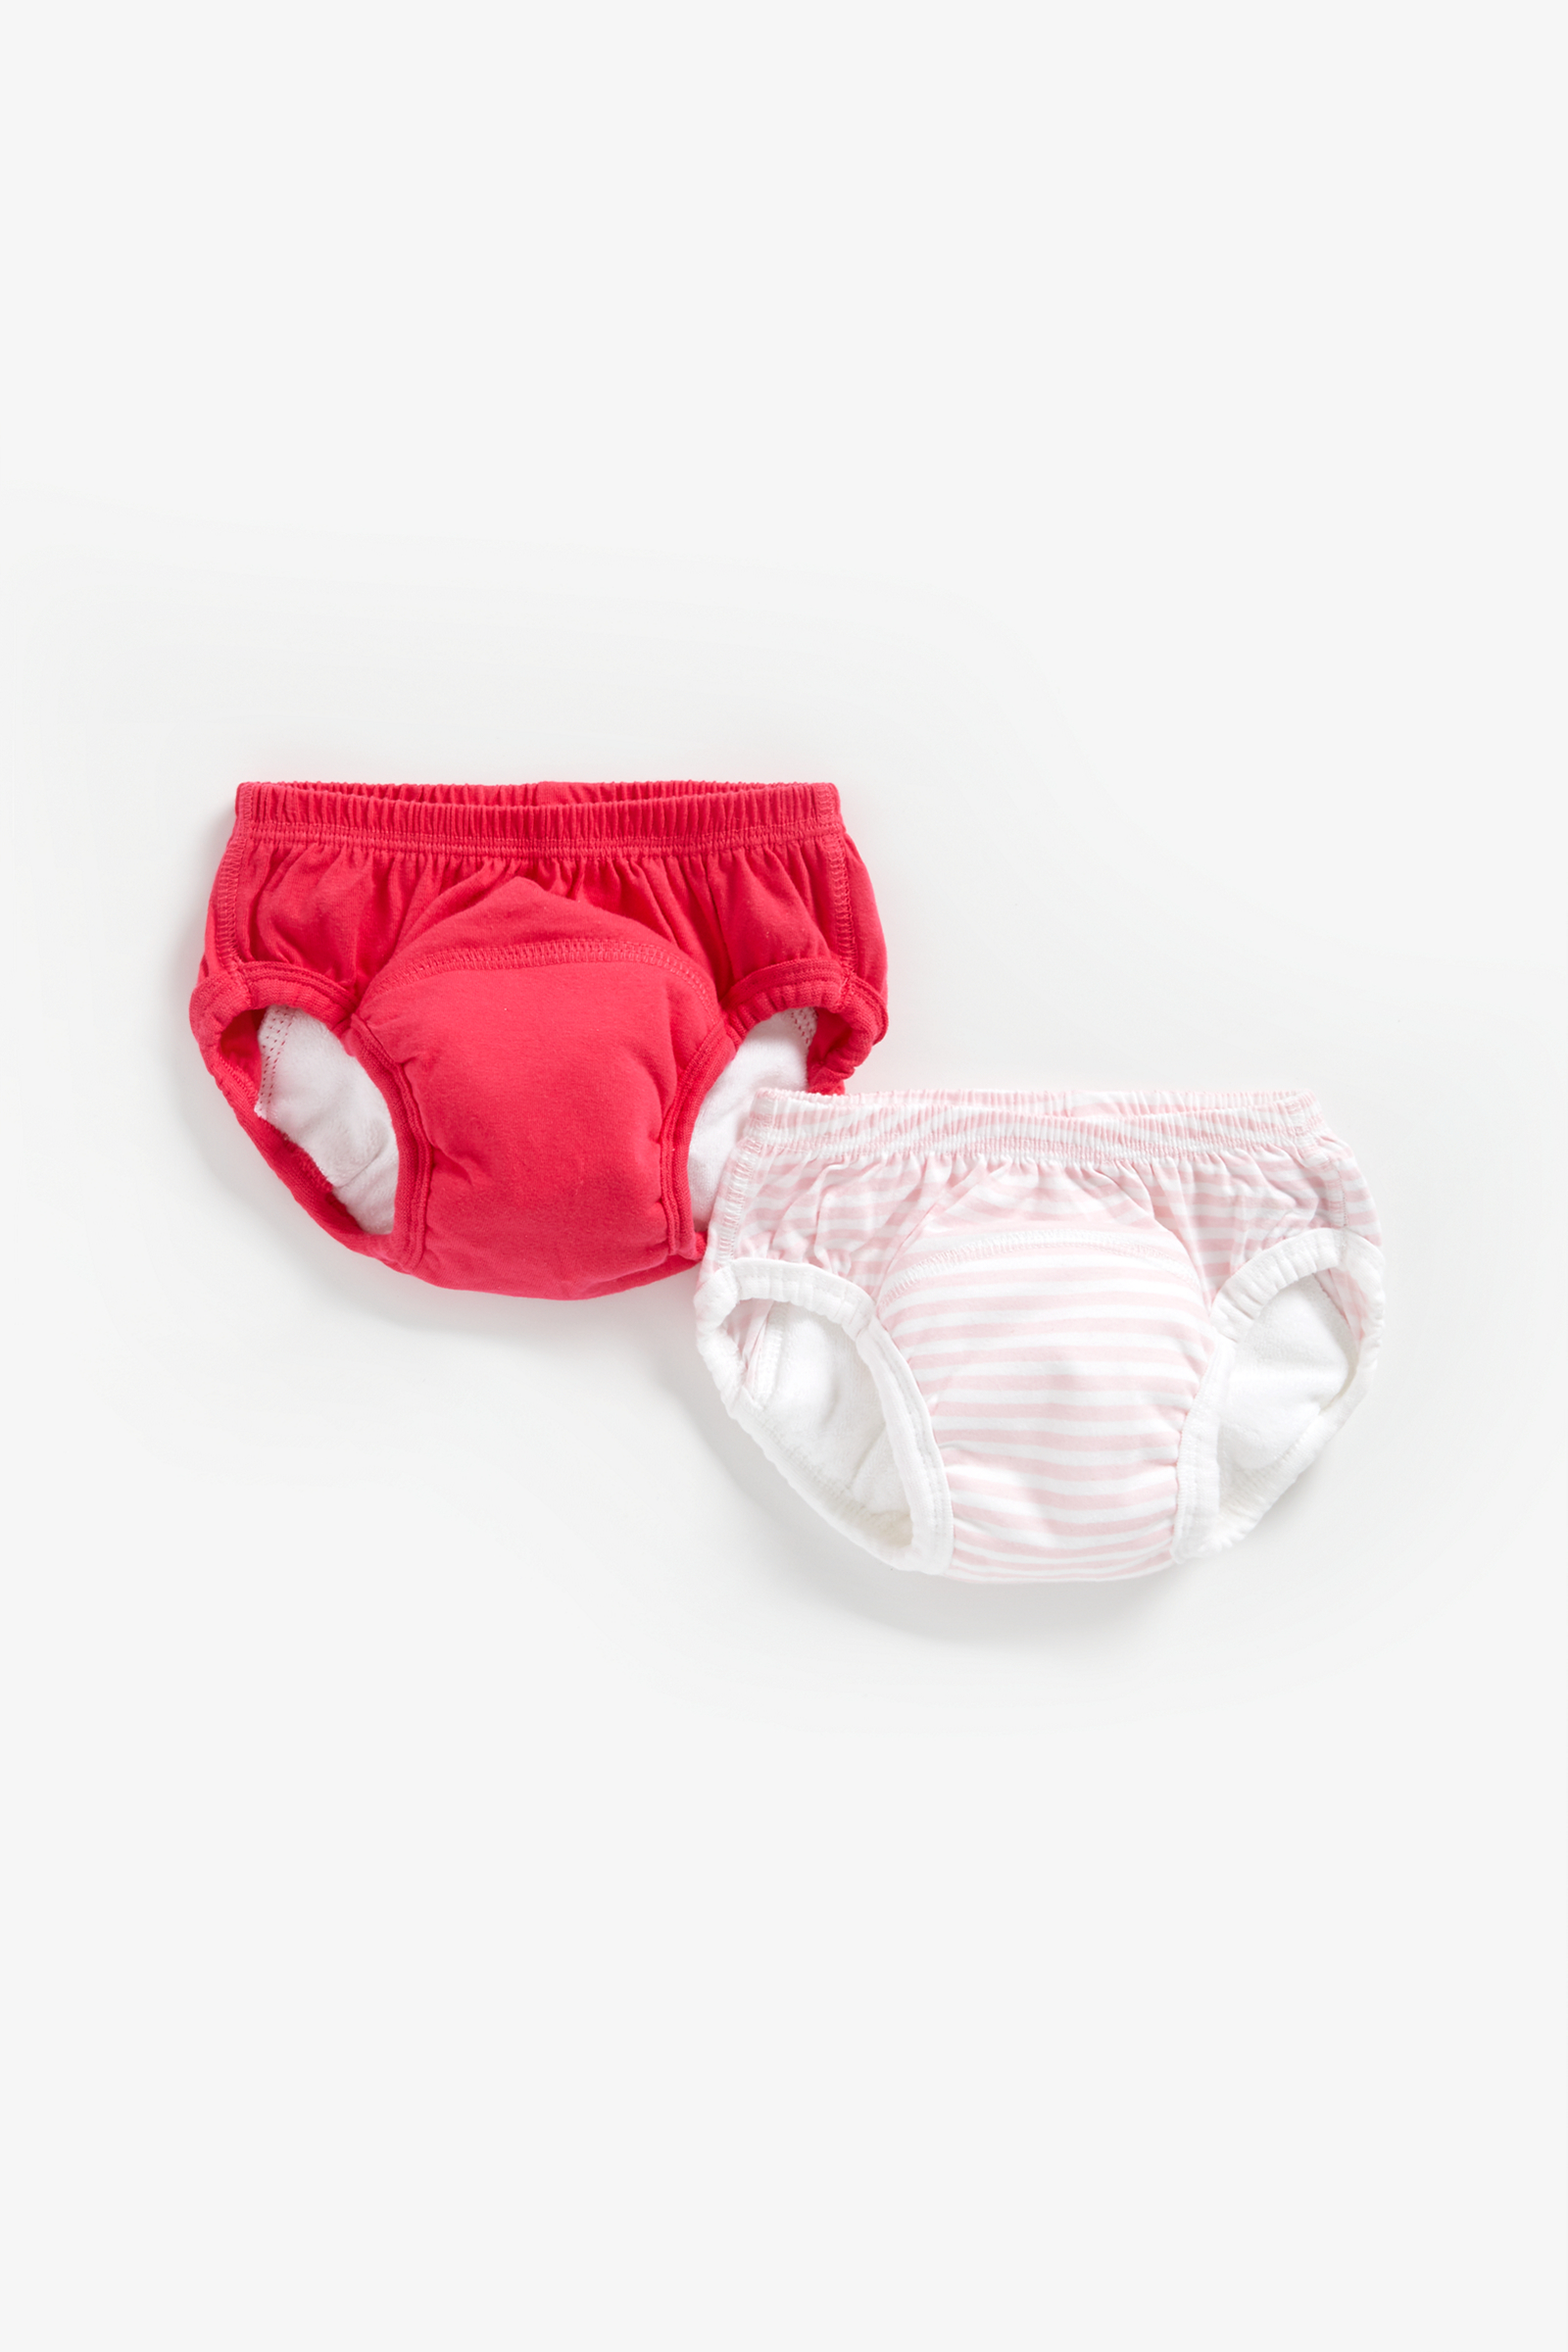 Buy Baby Toddler Boy Potty Training Pant Multipacks Underwear